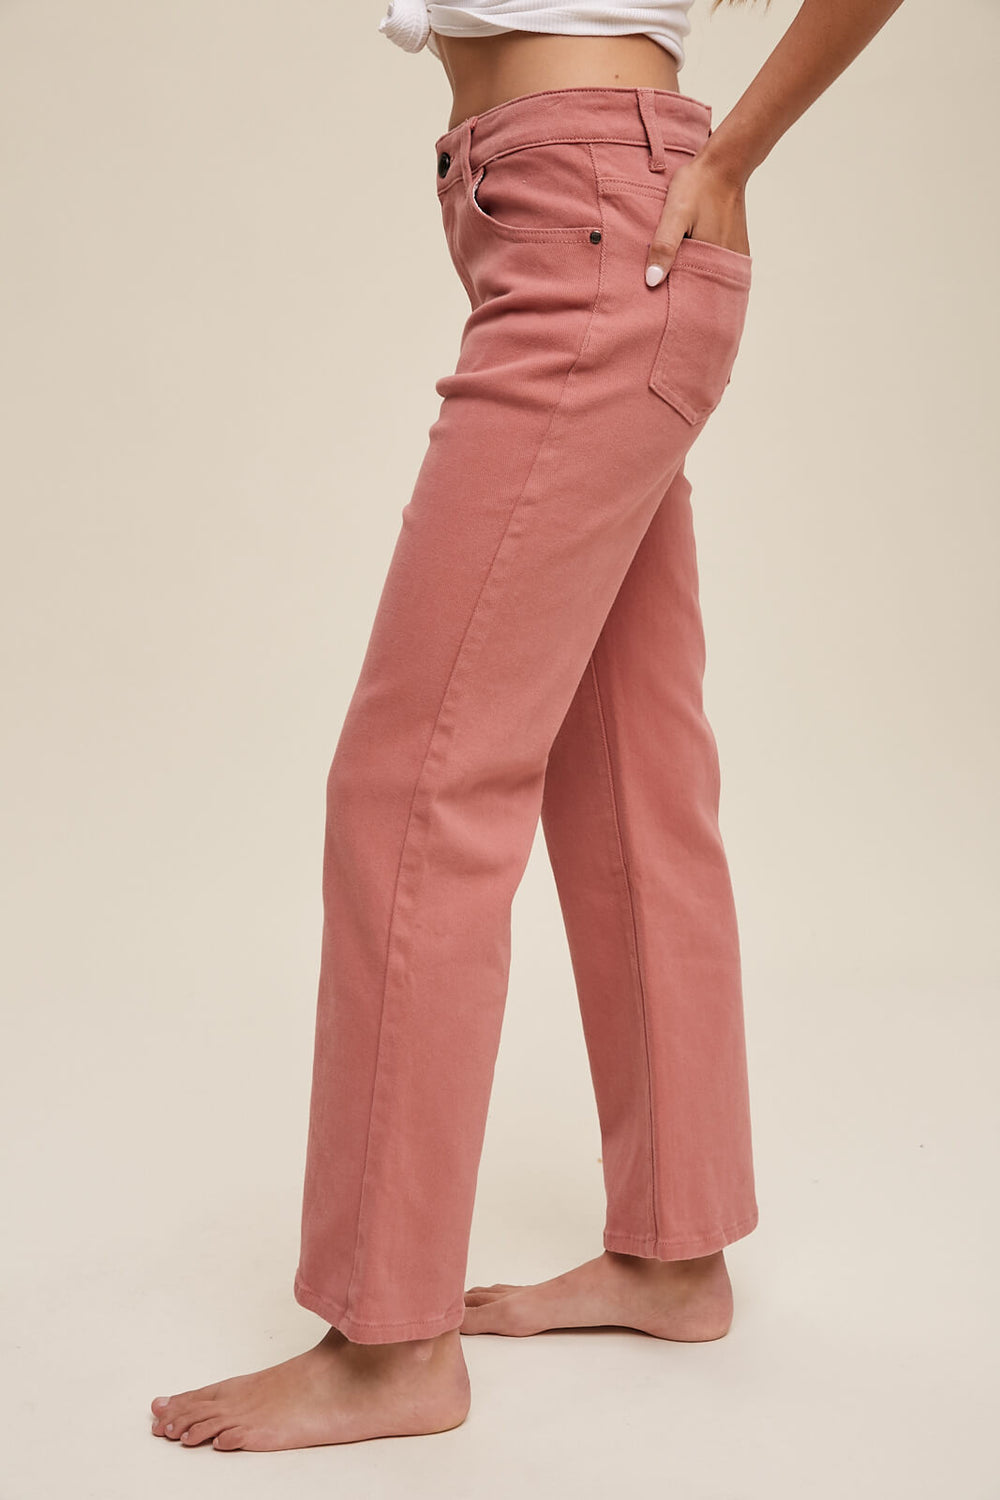 boutique-straight-leg-pink-jeans